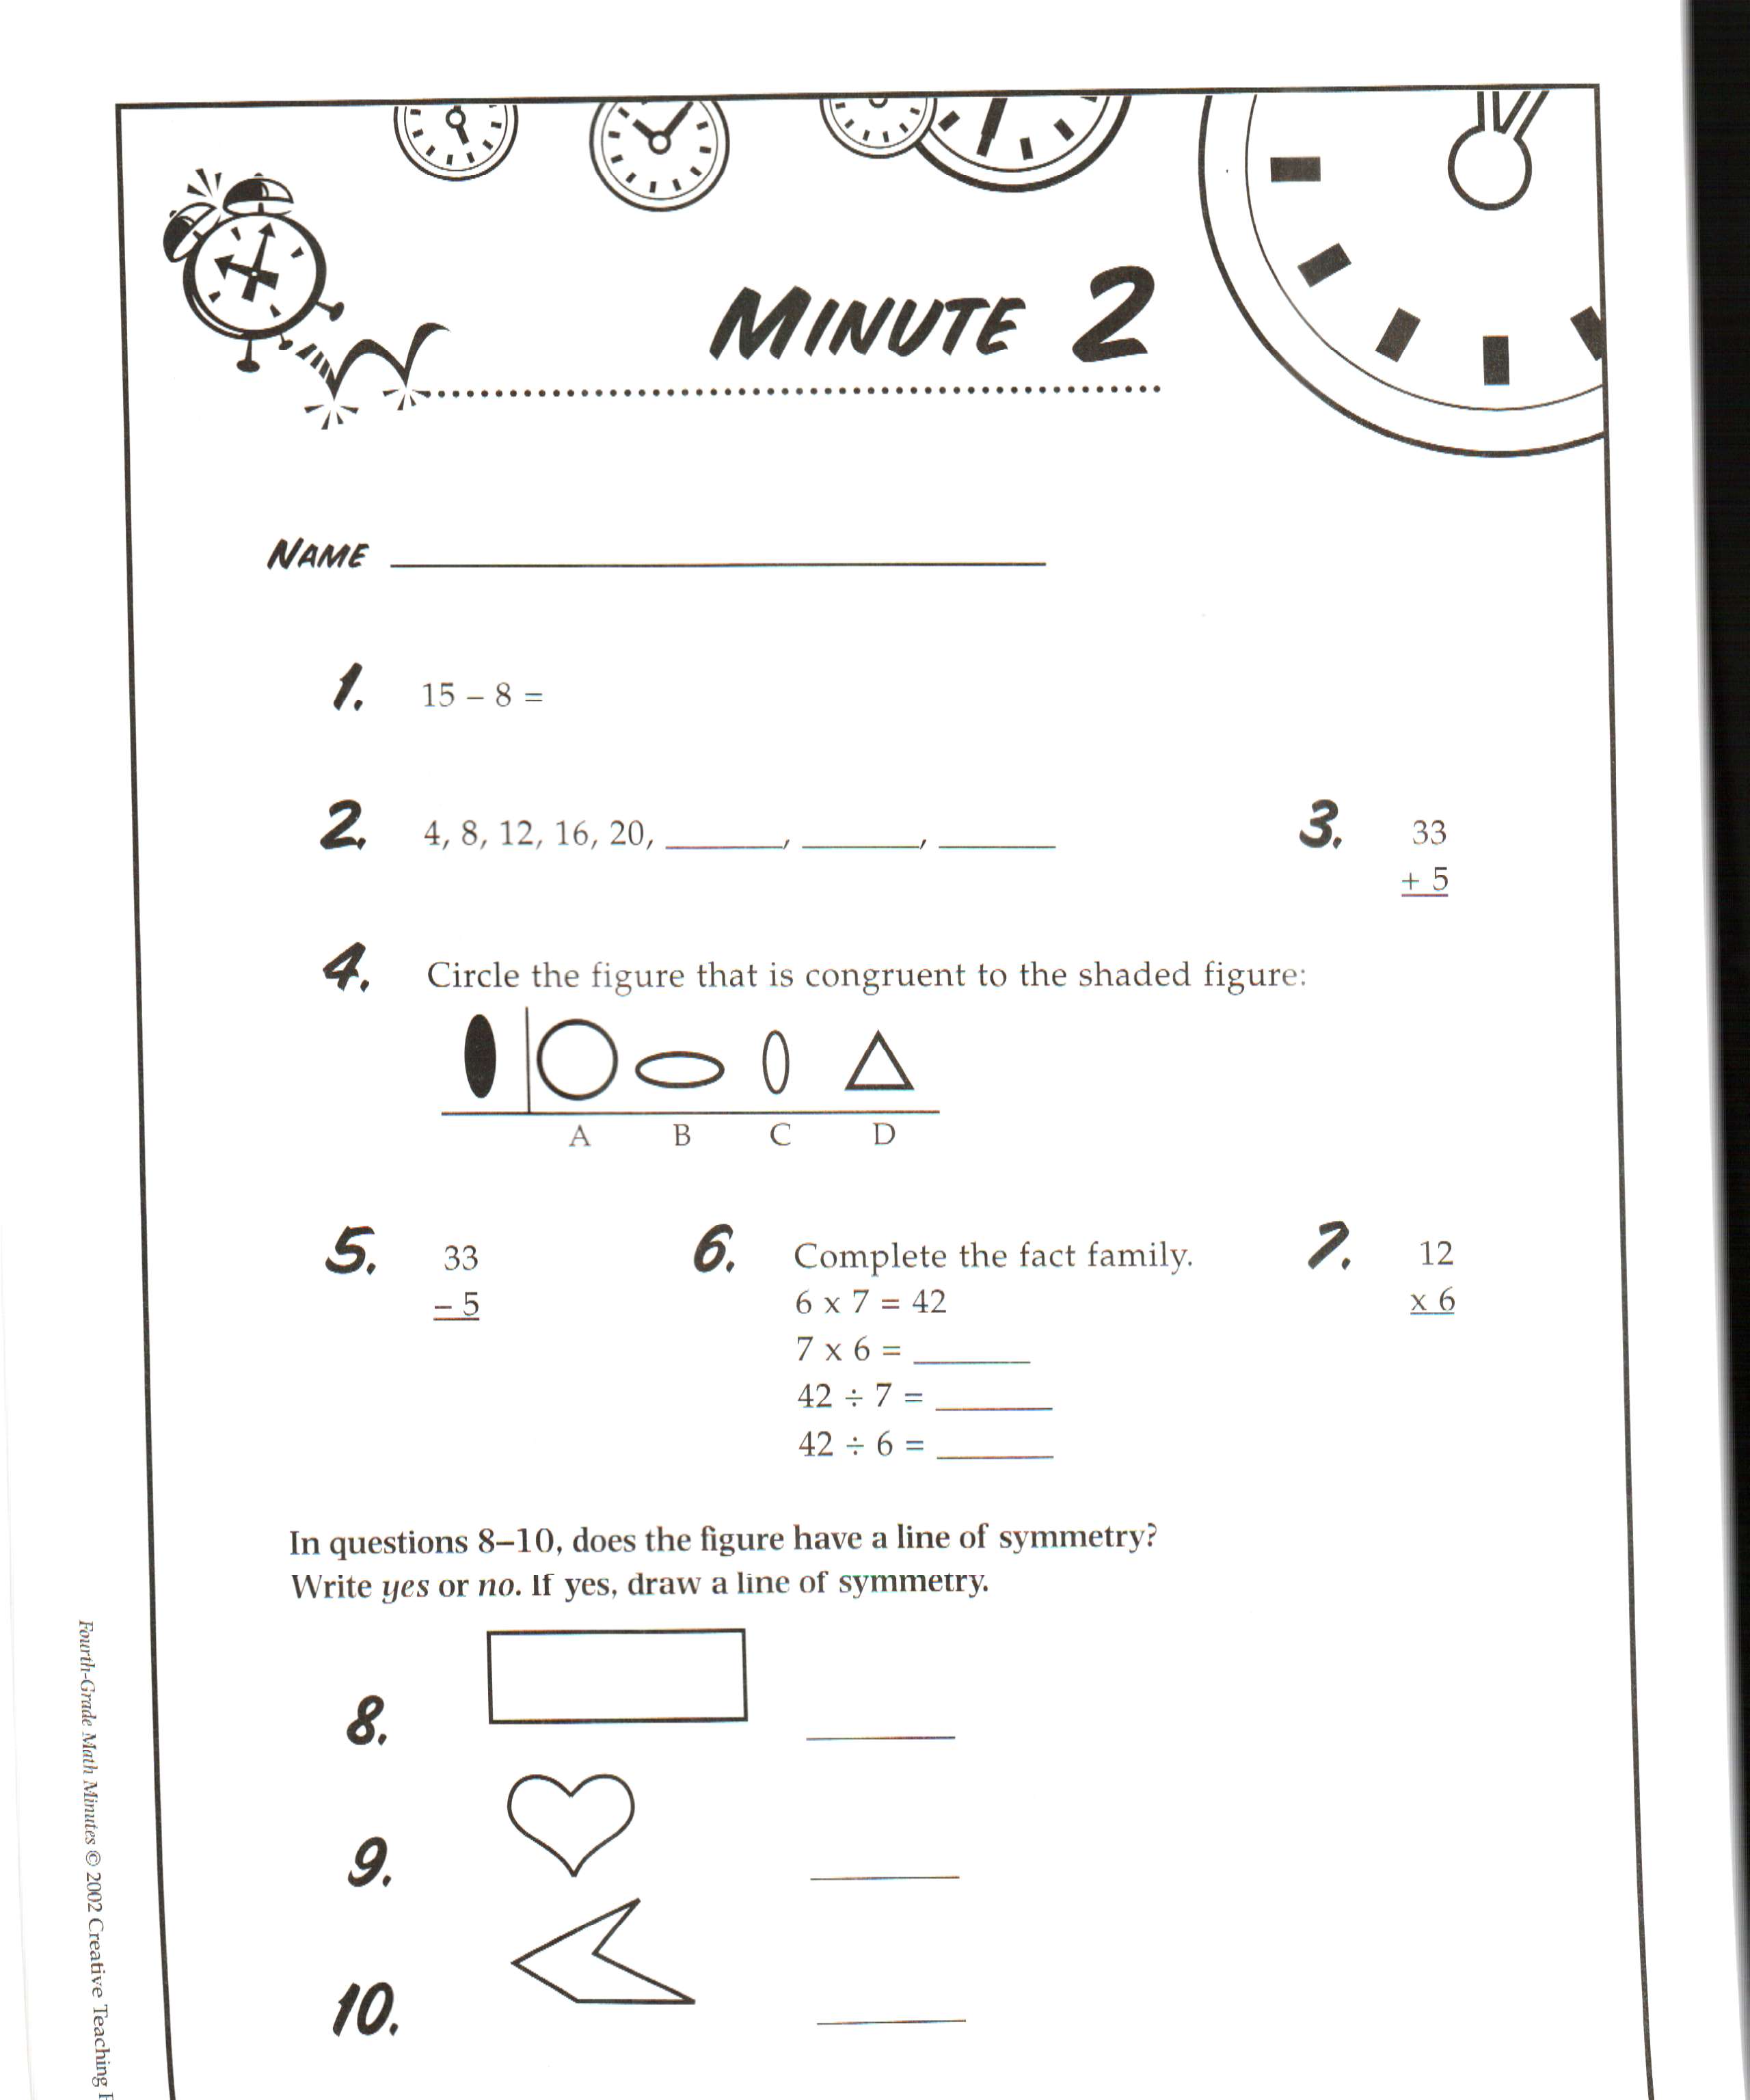 4th-grade-daily-math-minutes-mrs-faoro